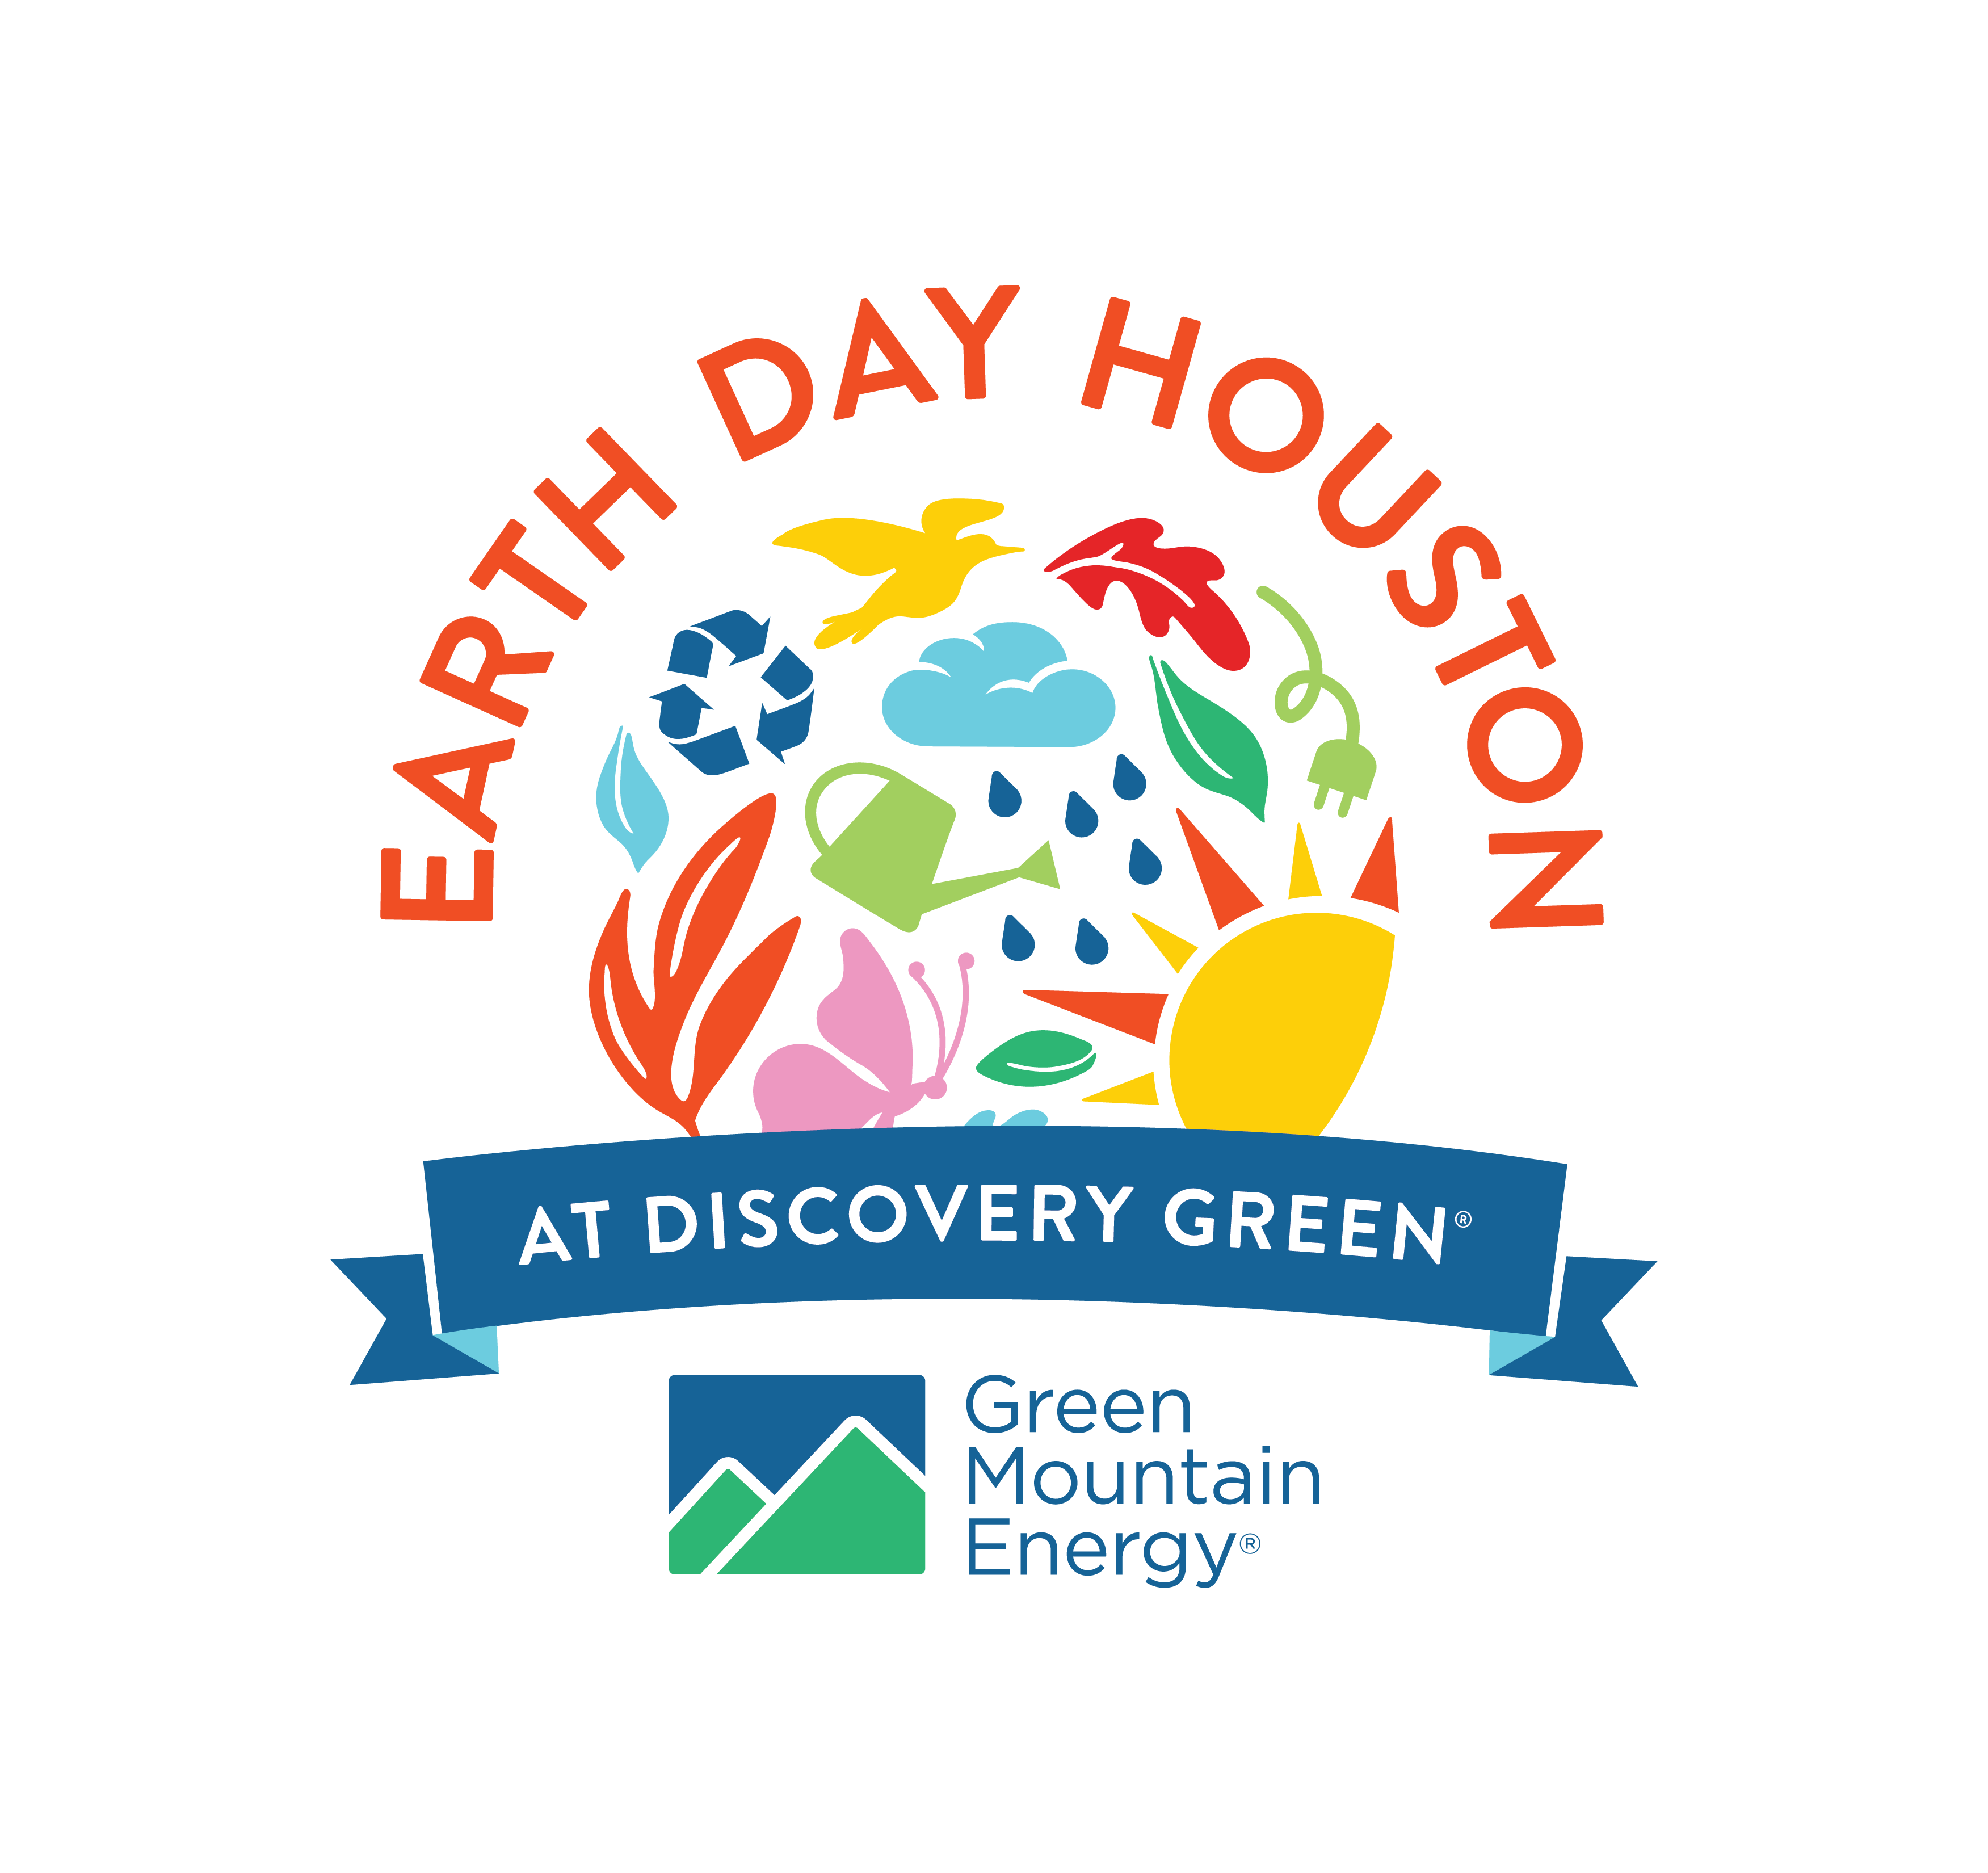 Earth Day Houston 2021 Citizens' Environmental Coalition